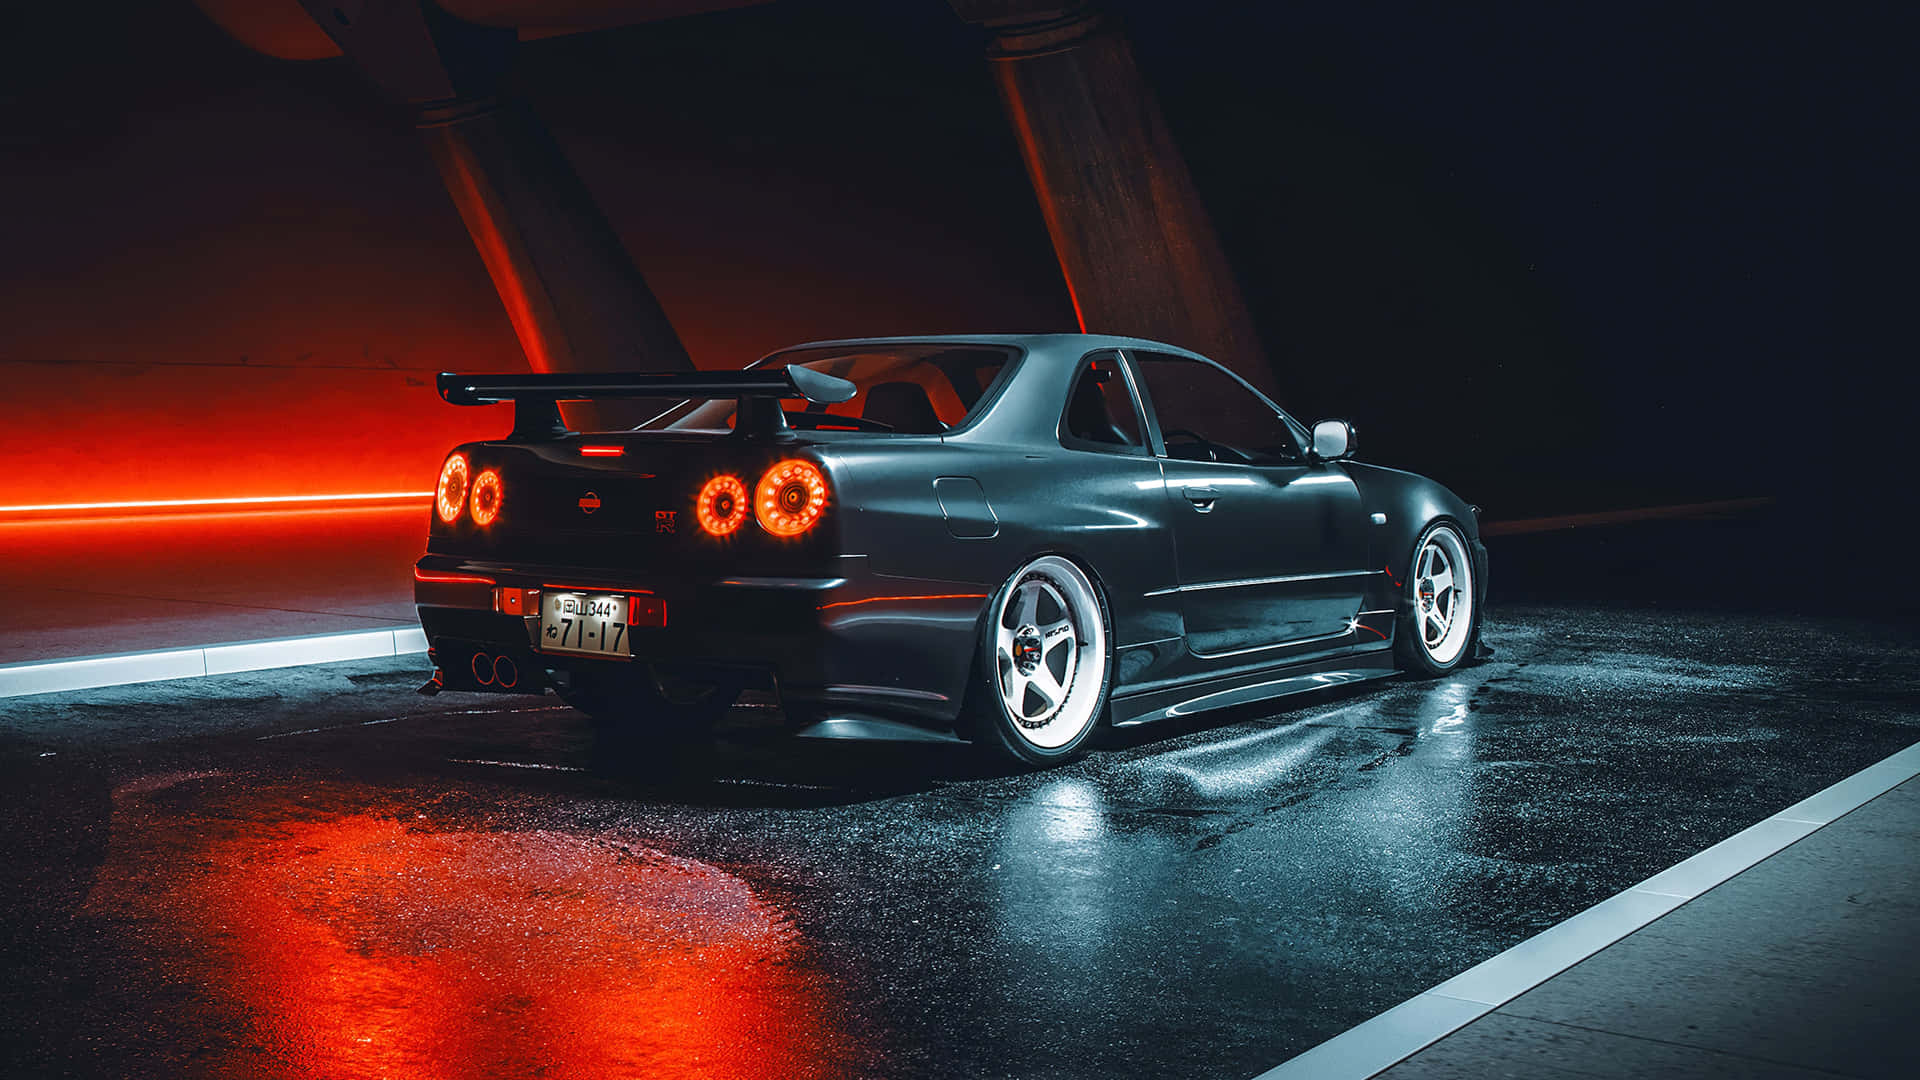 Nissan Skyline [wallpaper] Background